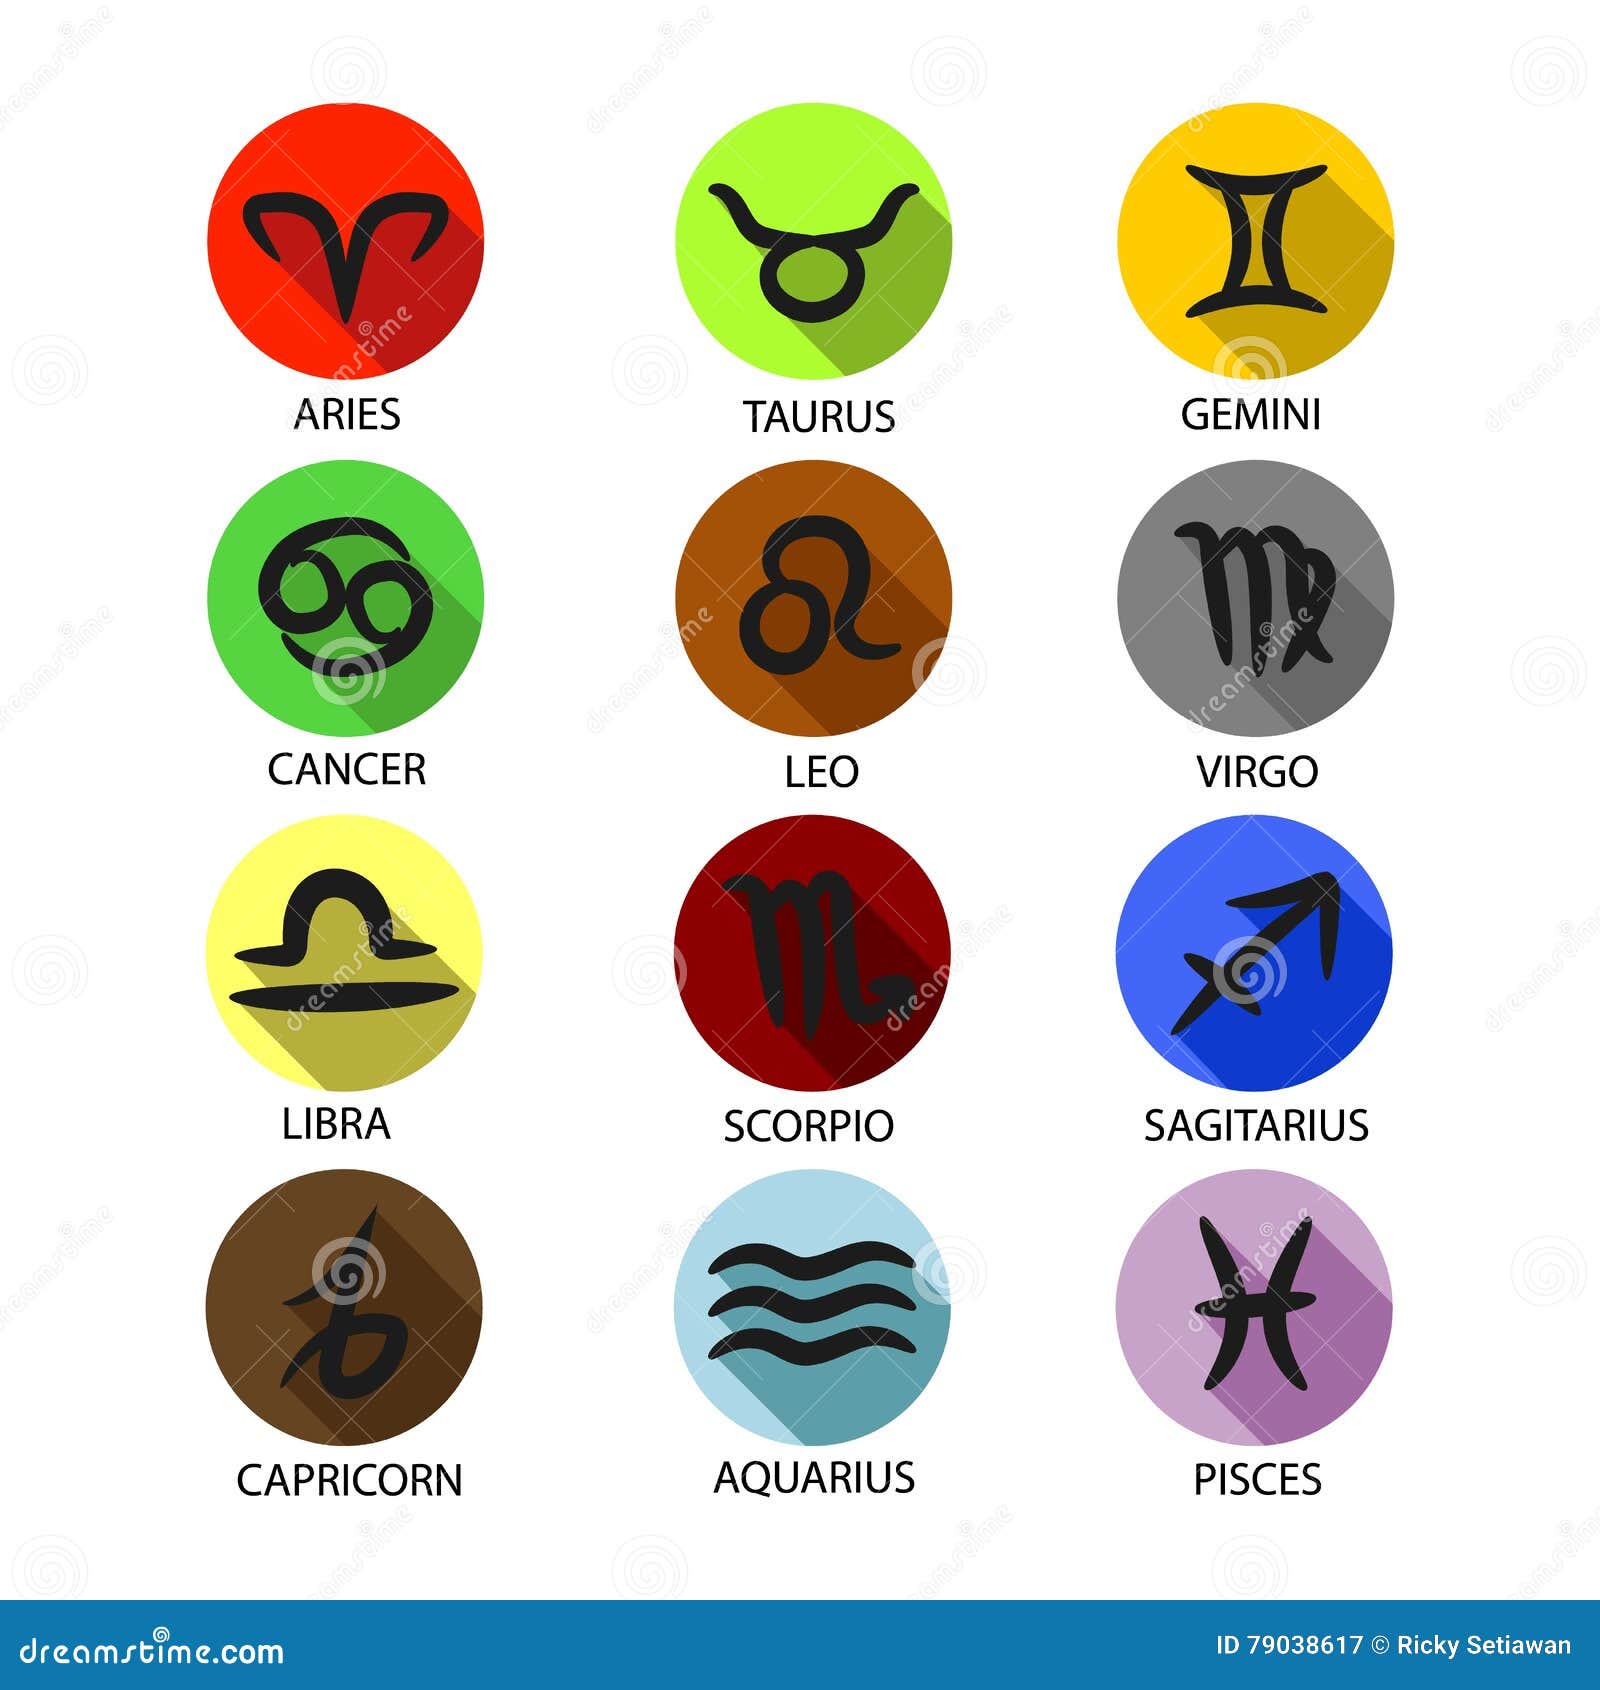 12 Zodiac Signs Symbols